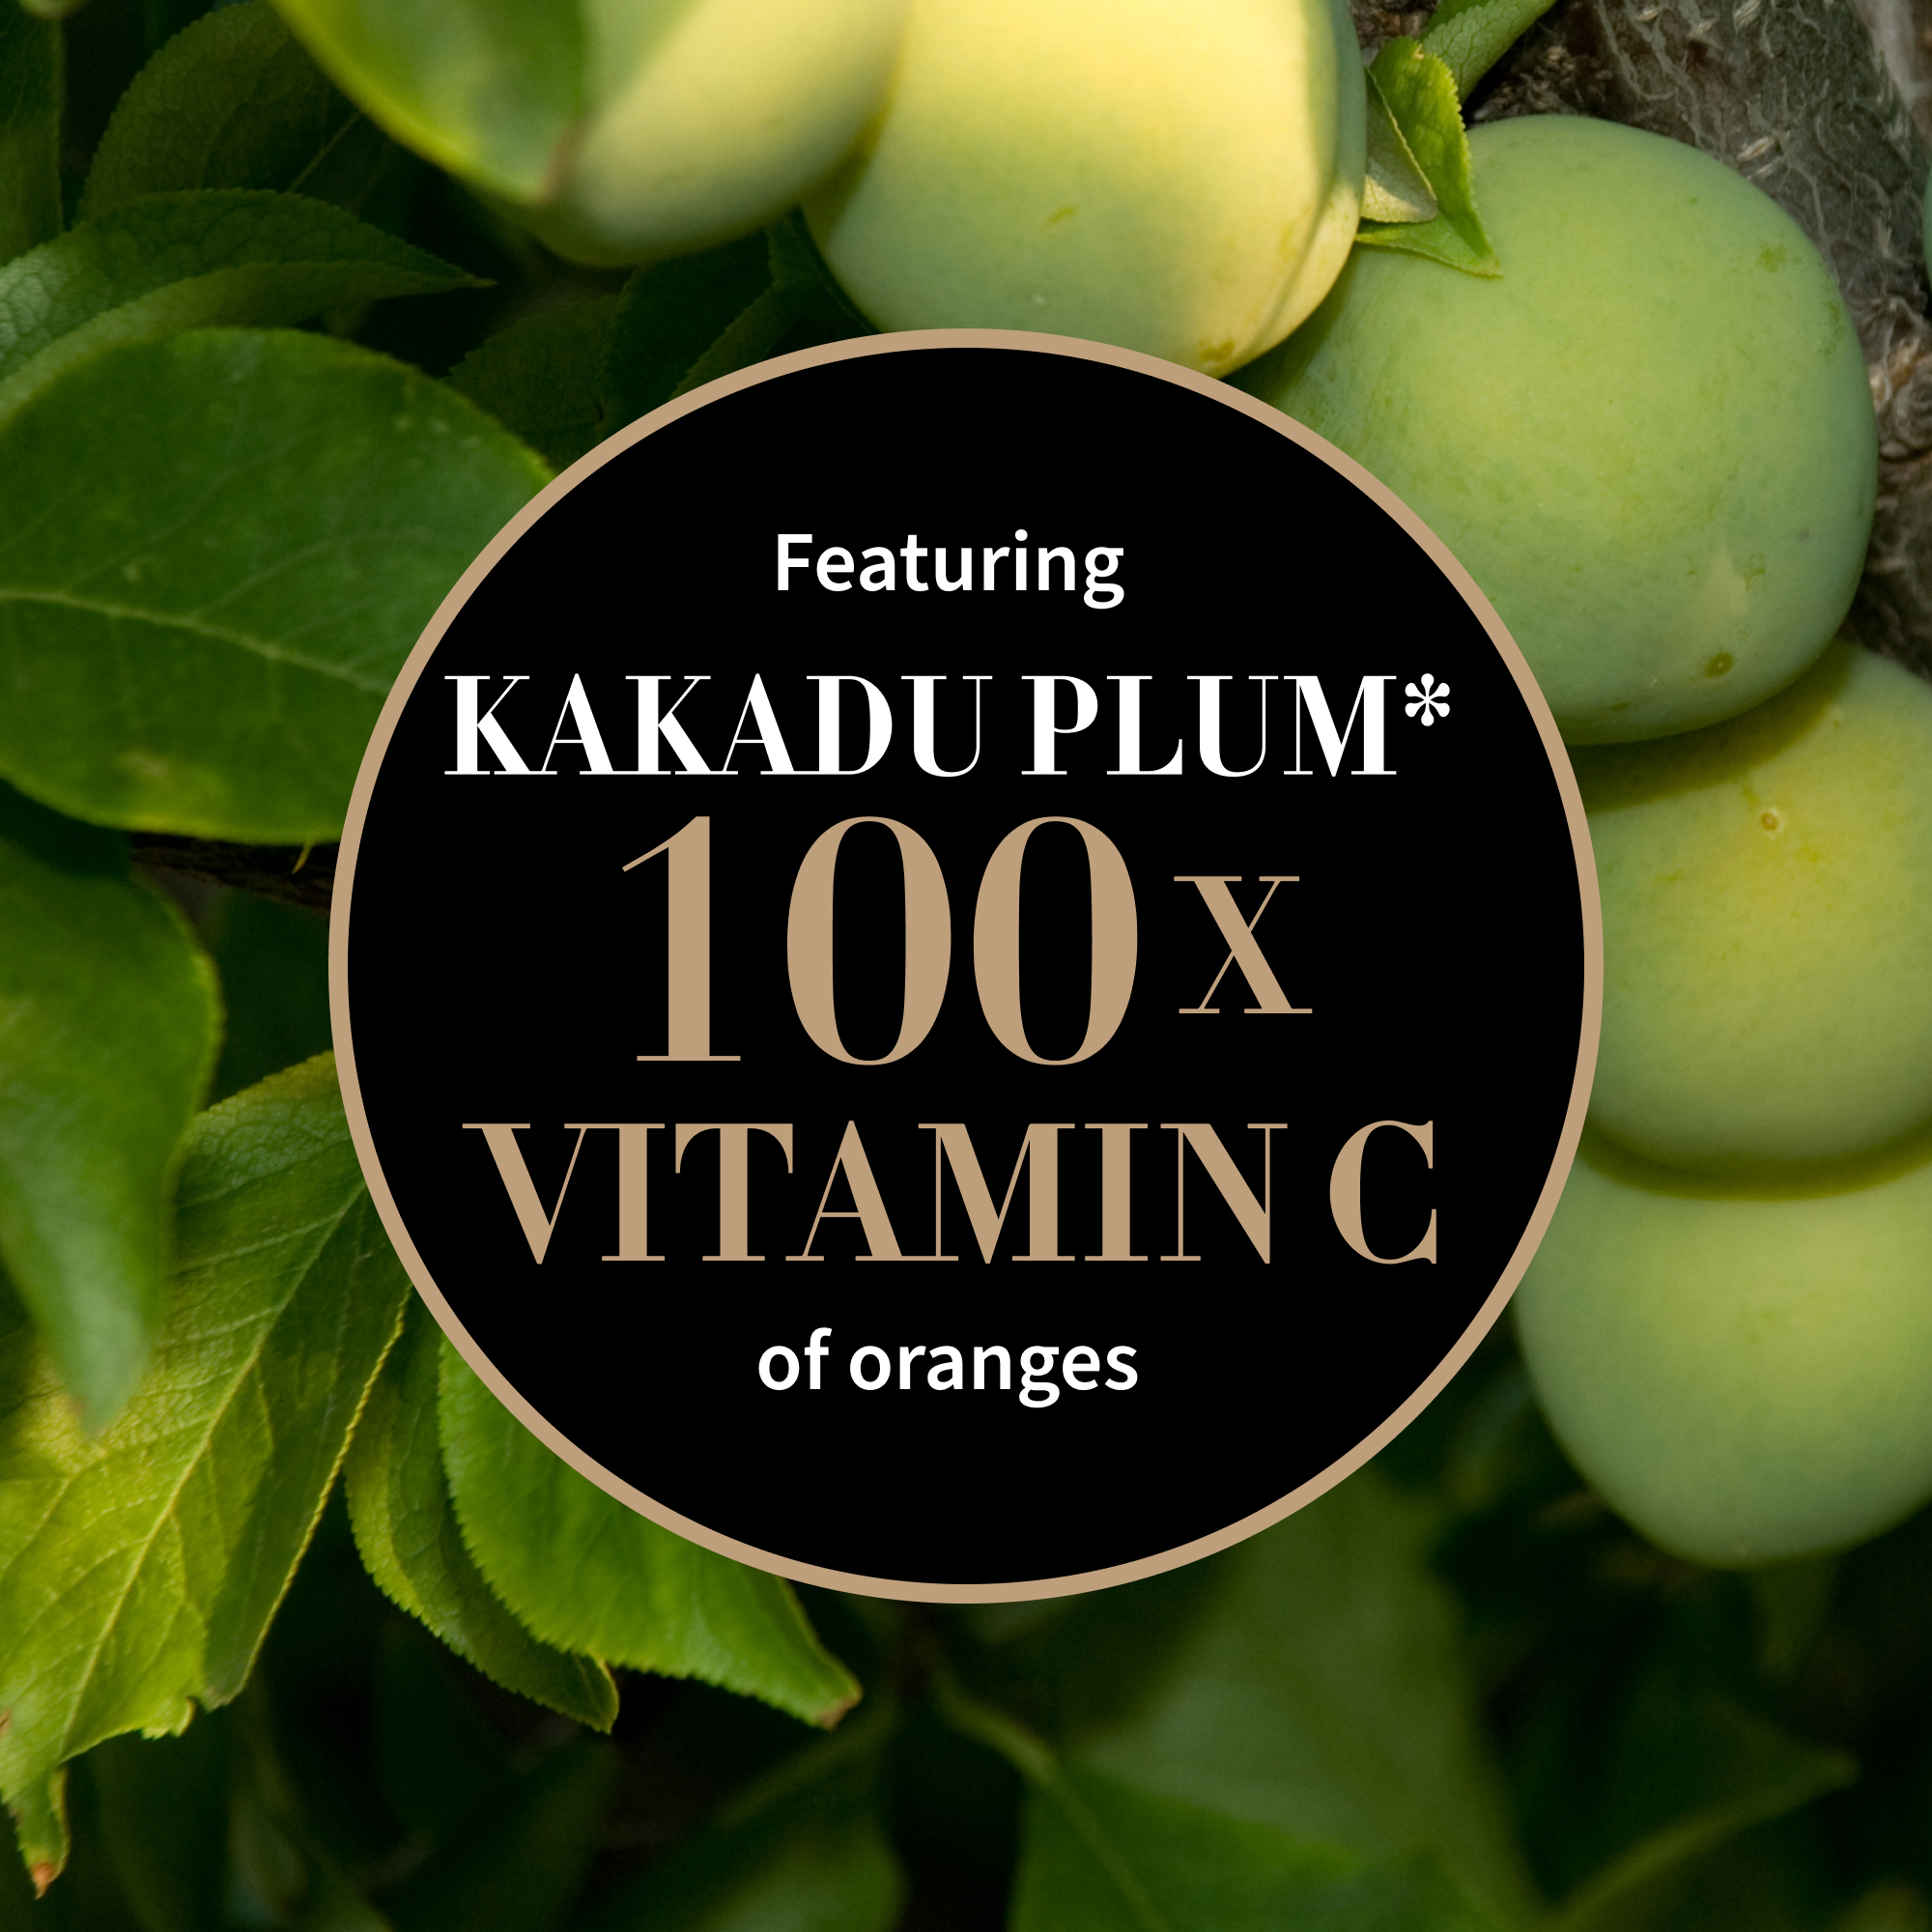 Featuring Kakadu plum* 100 x vitamin C of oranges